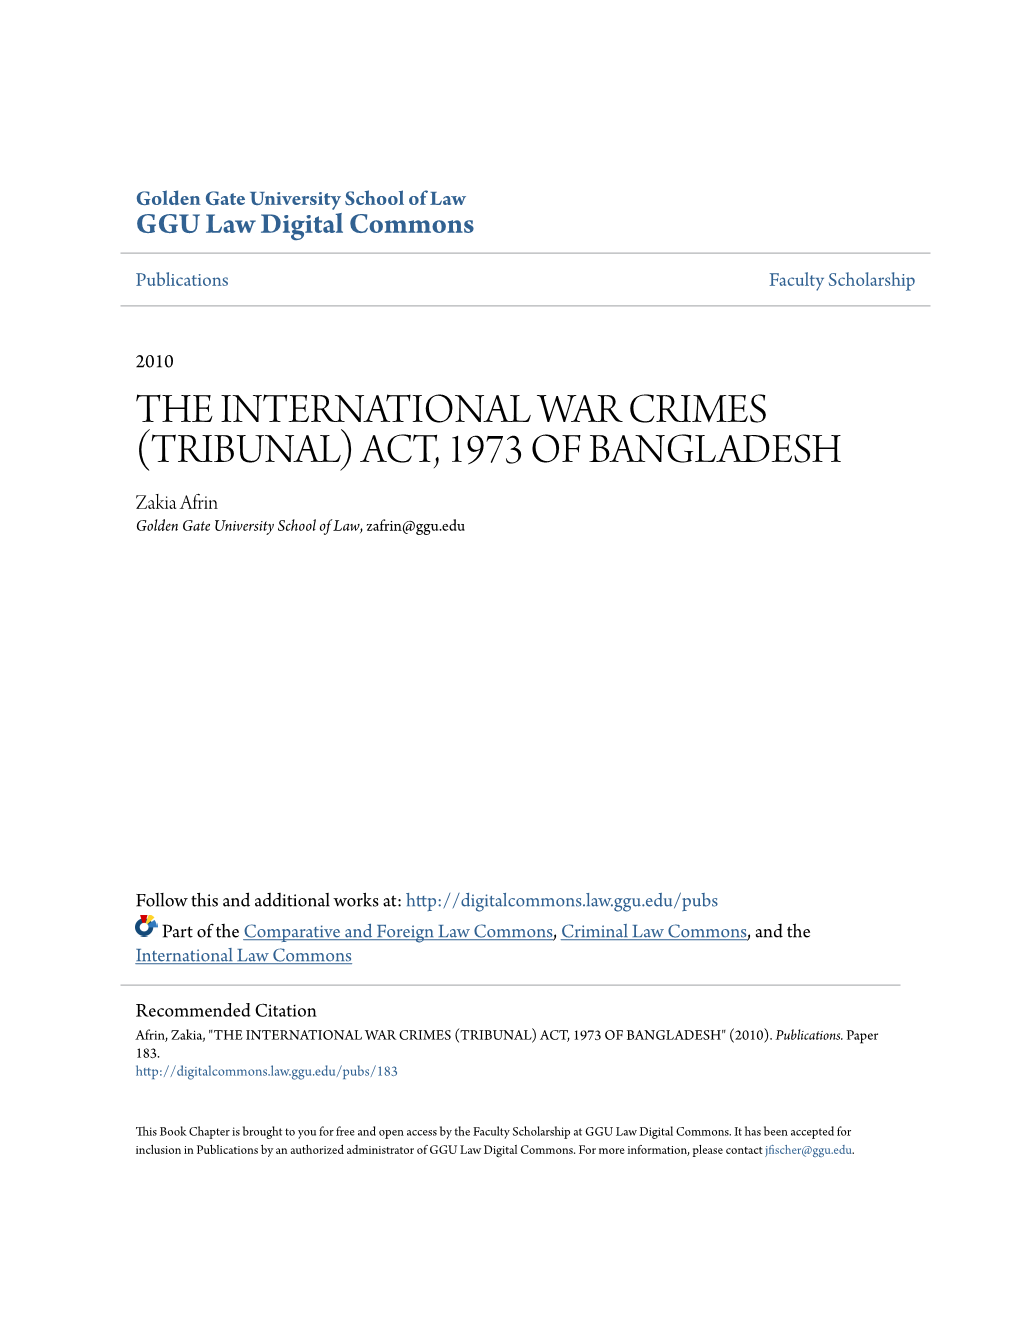 THE INTERNATIONAL WAR CRIMES (TRIBUNAL) ACT, 1973 of BANGLADESH Zakia Afrin Golden Gate University School of Law, Zafrin@Ggu.Edu